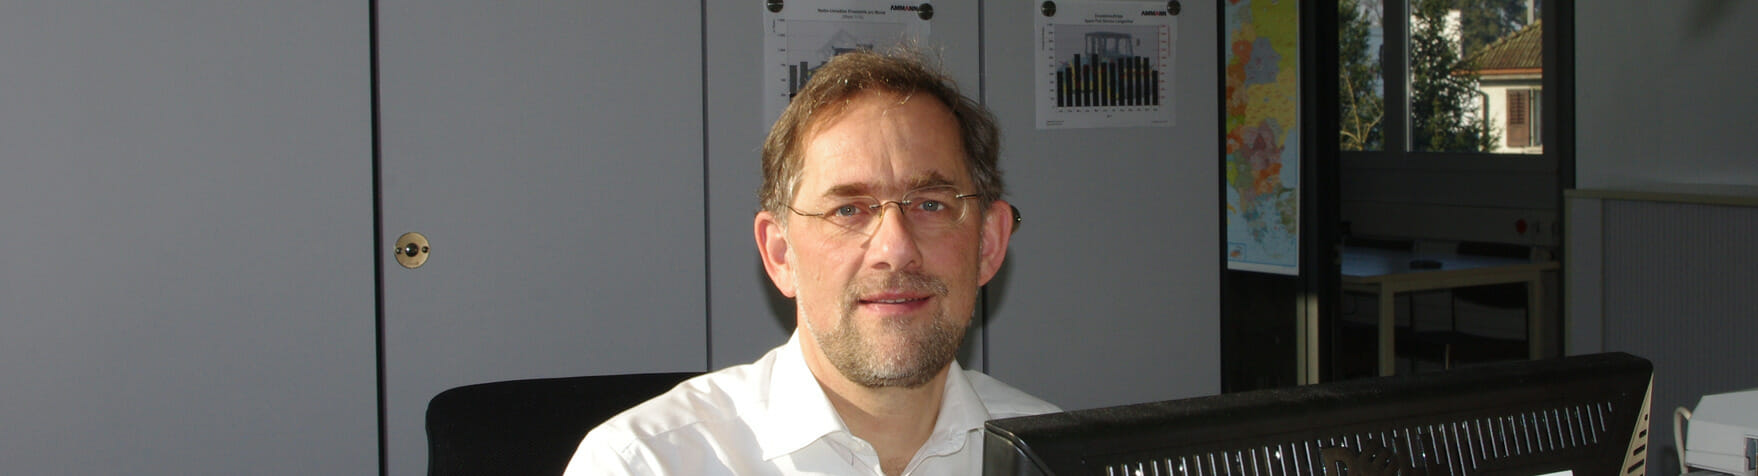 Andreas Noll, Unternehmensberater